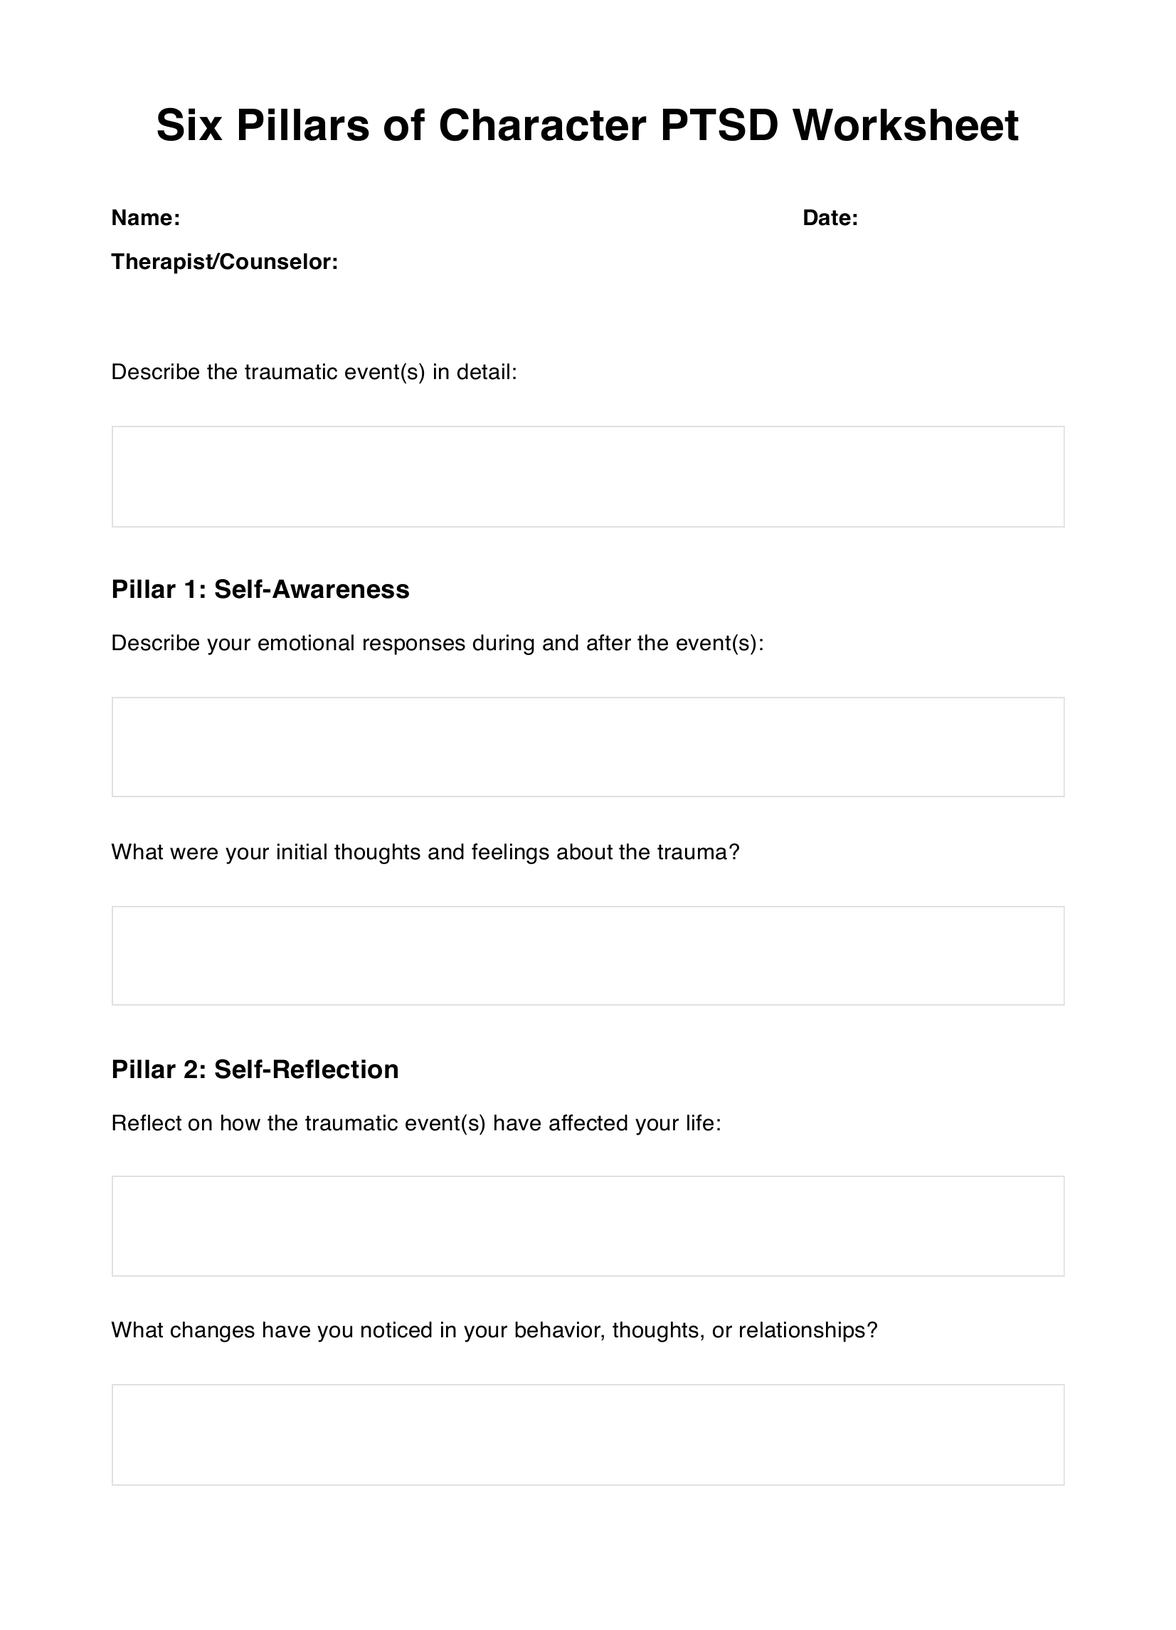 Six Pillars of Character PTSD Worksheet PDF Example